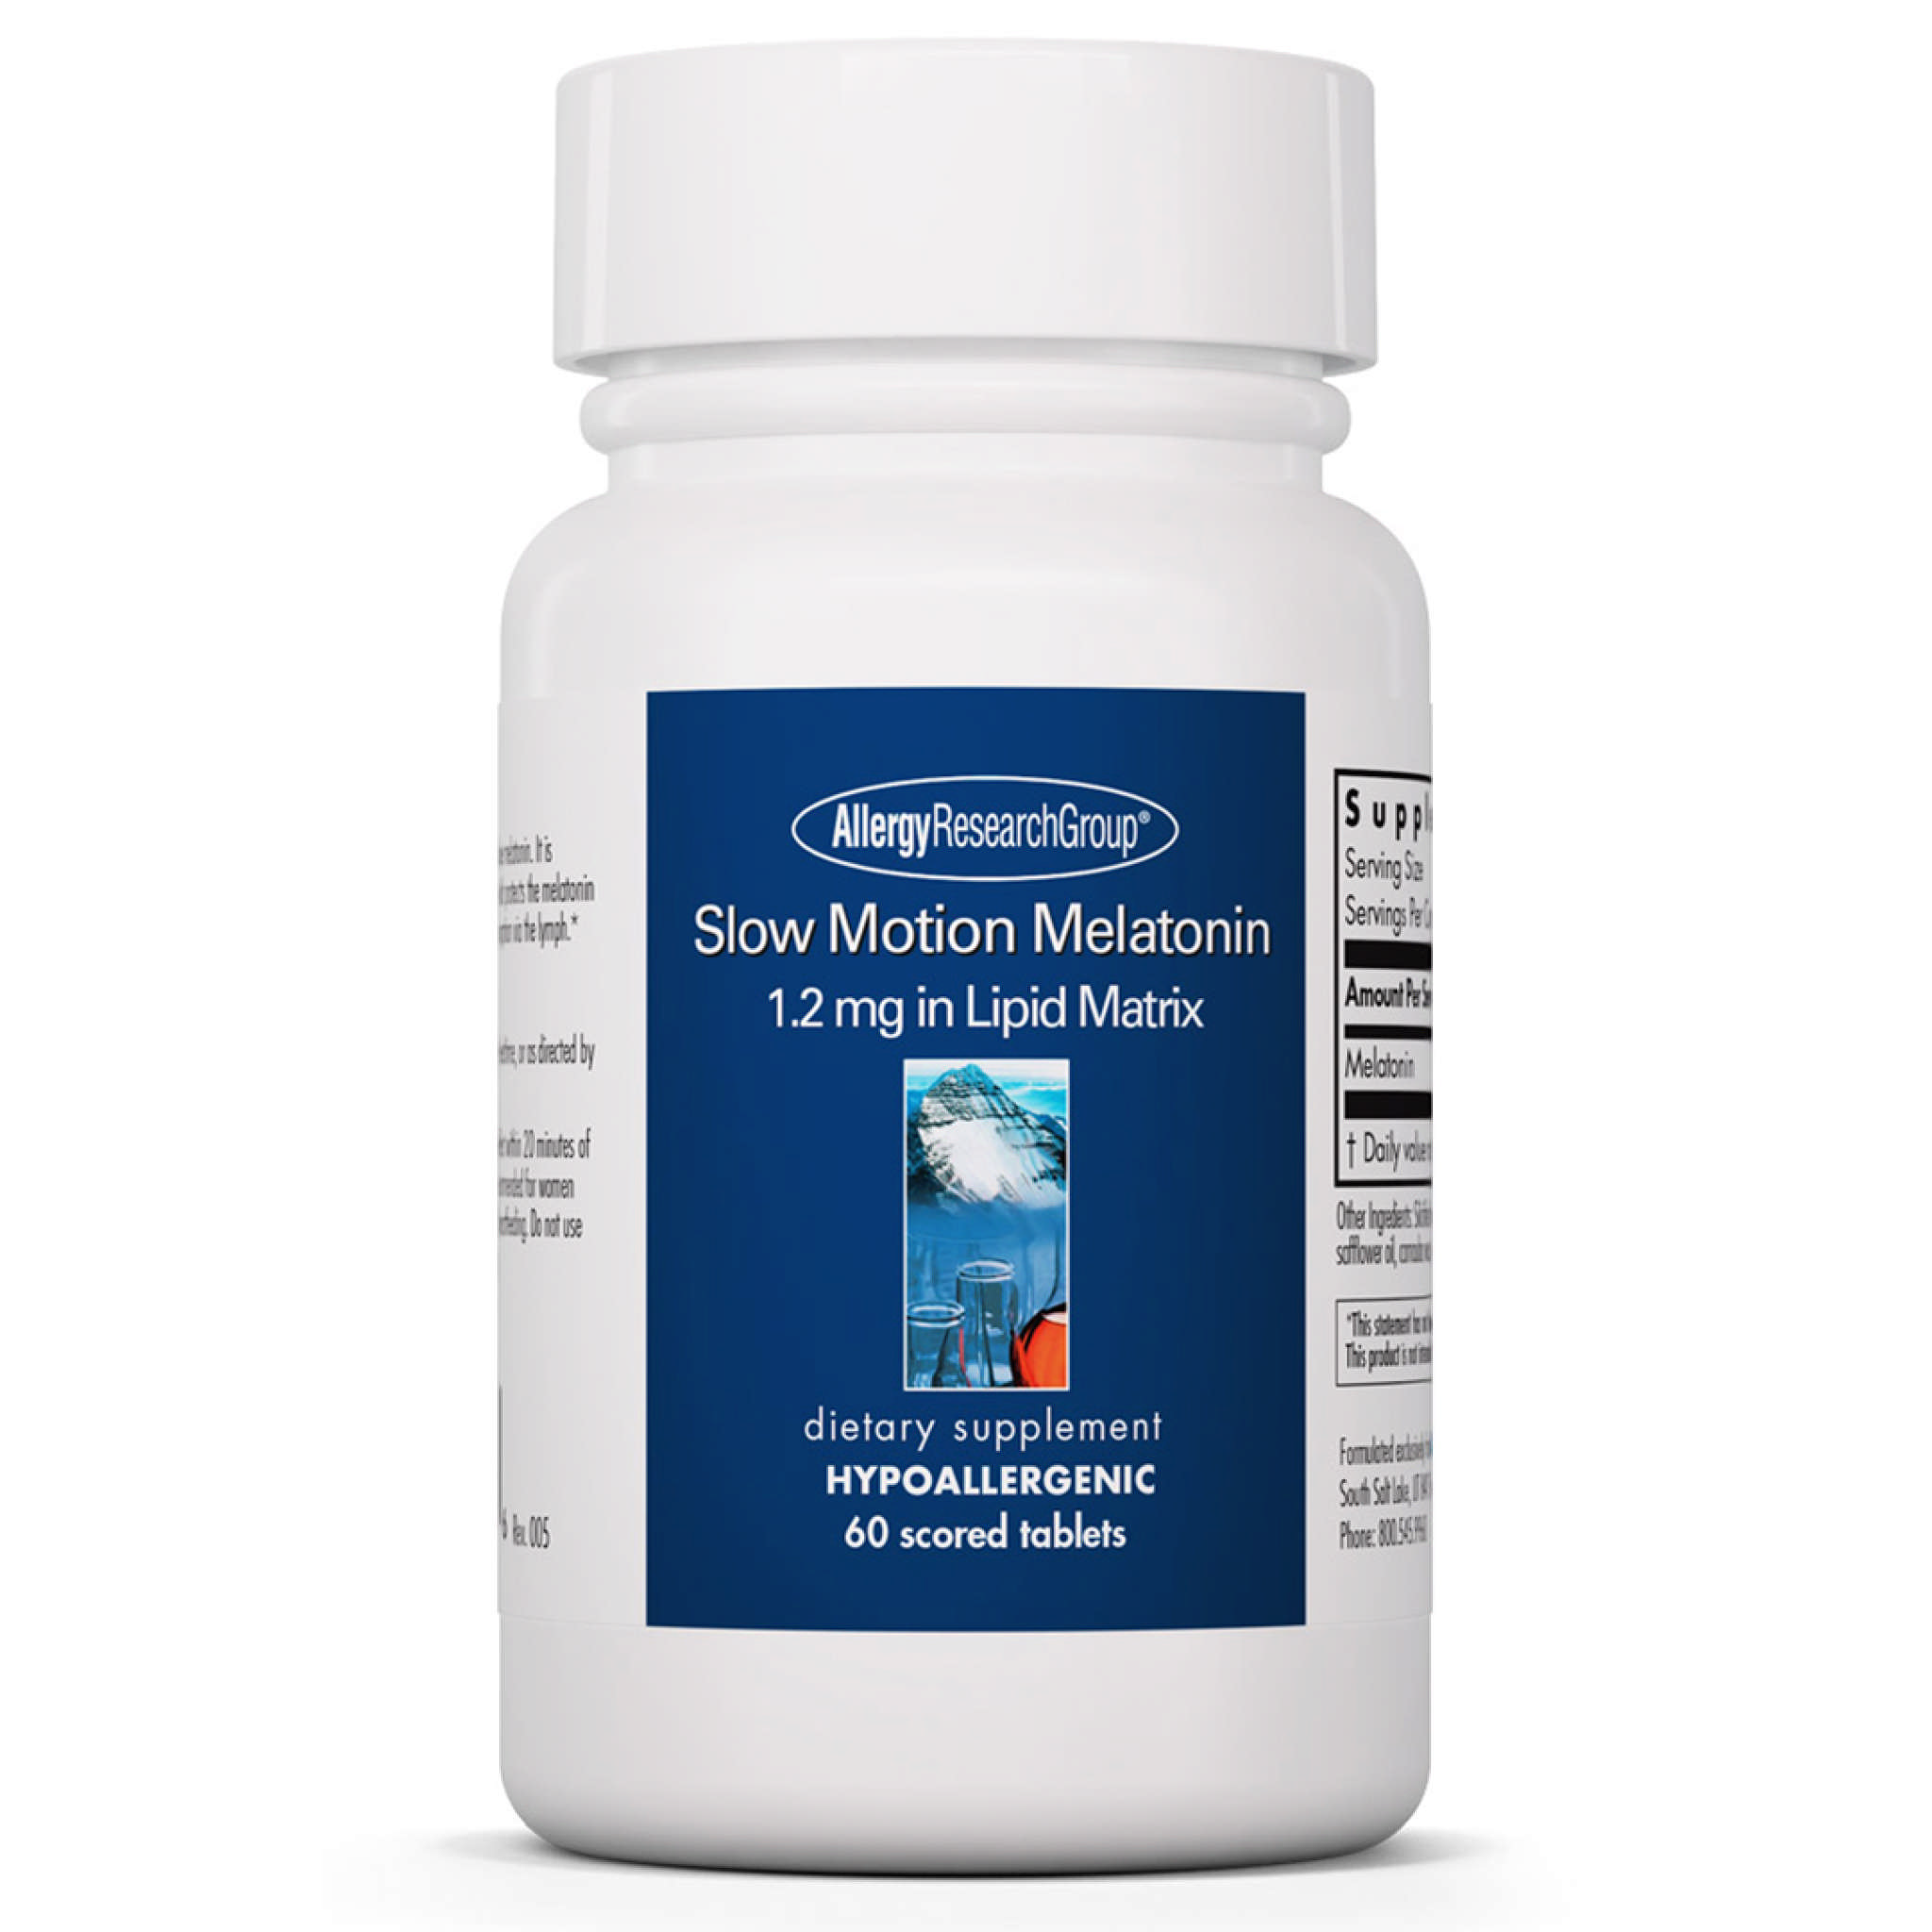 Allergy Research Group - Melatonin 1.2 mg Slow Motion